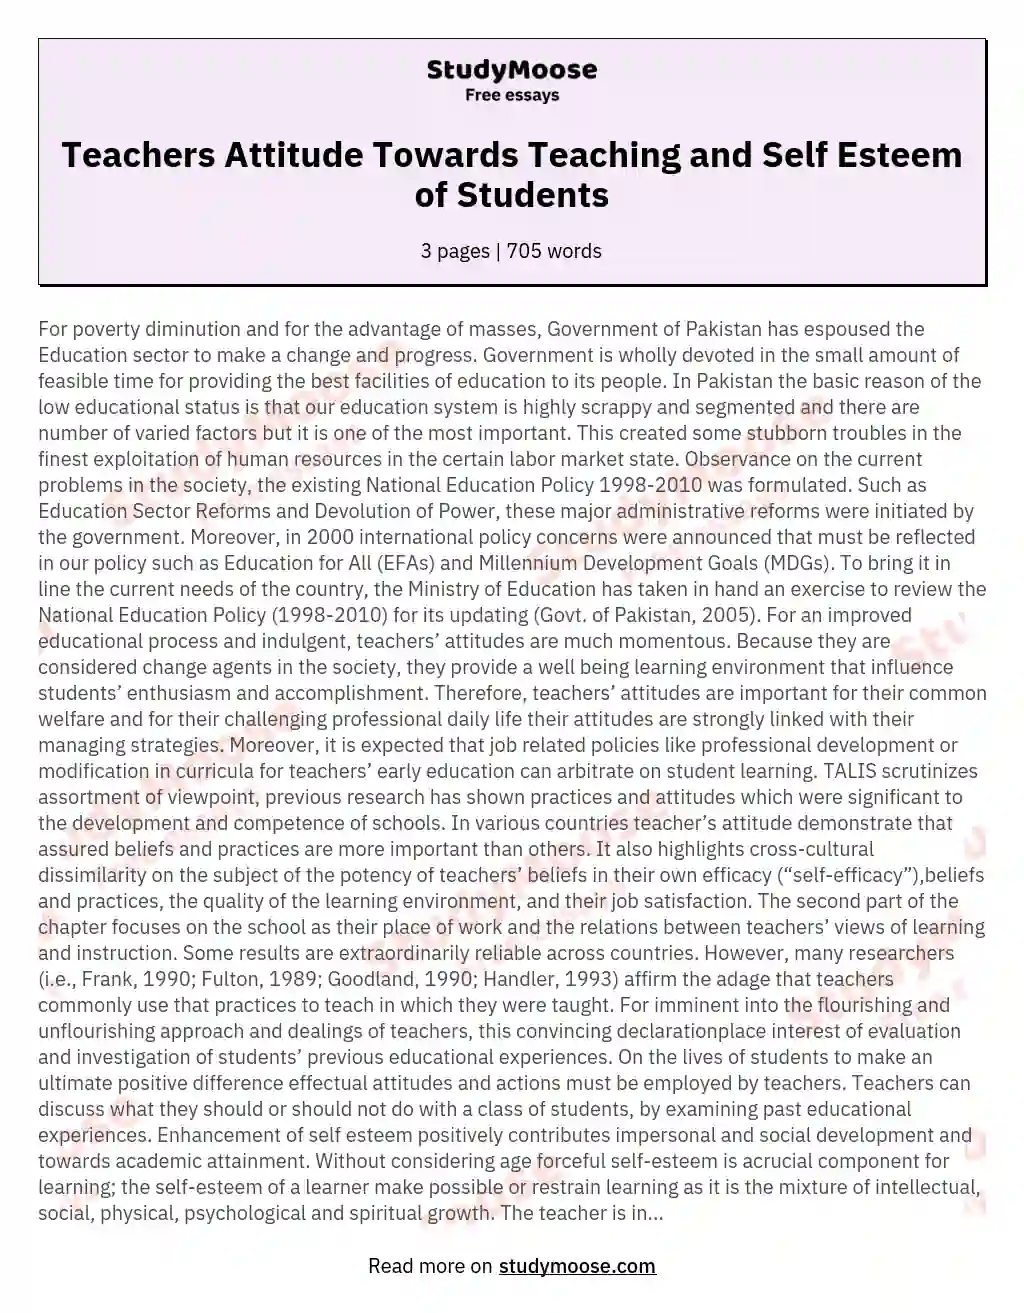 Teachers Attitude Towards Teaching and Self Esteem of Students